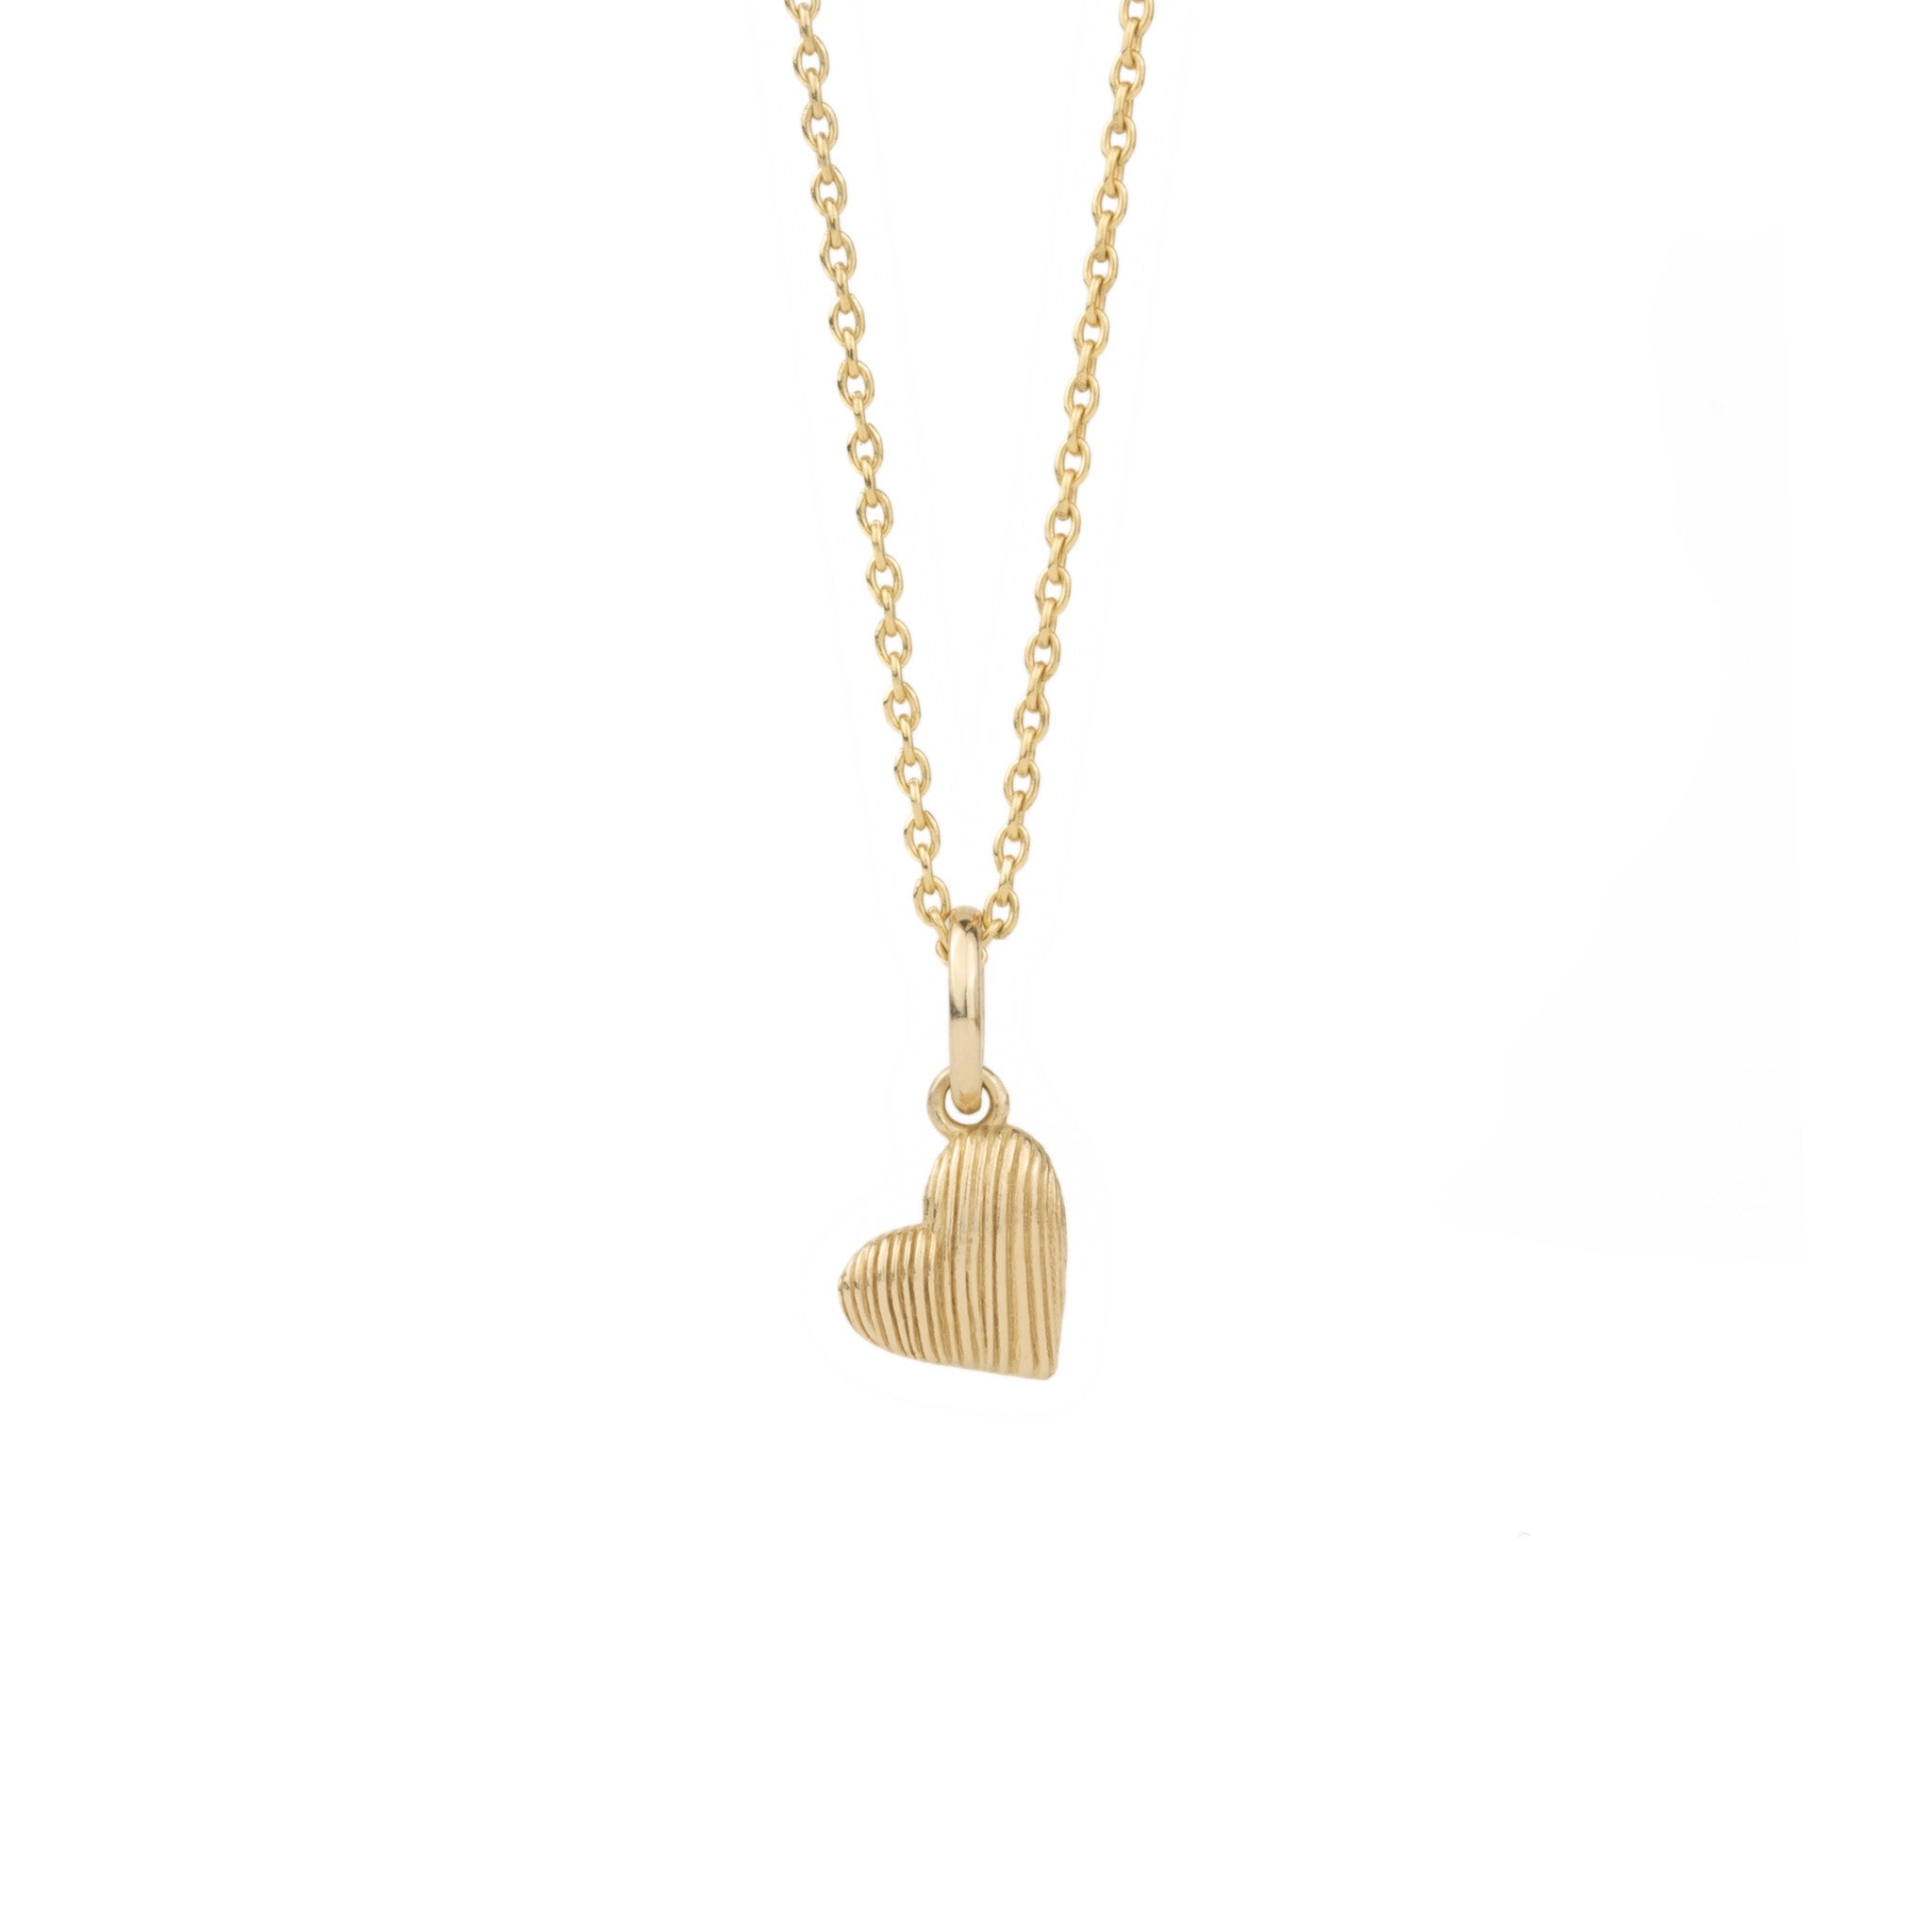 An Aiden Jae Mini Reversible Heart Charm Necklace.